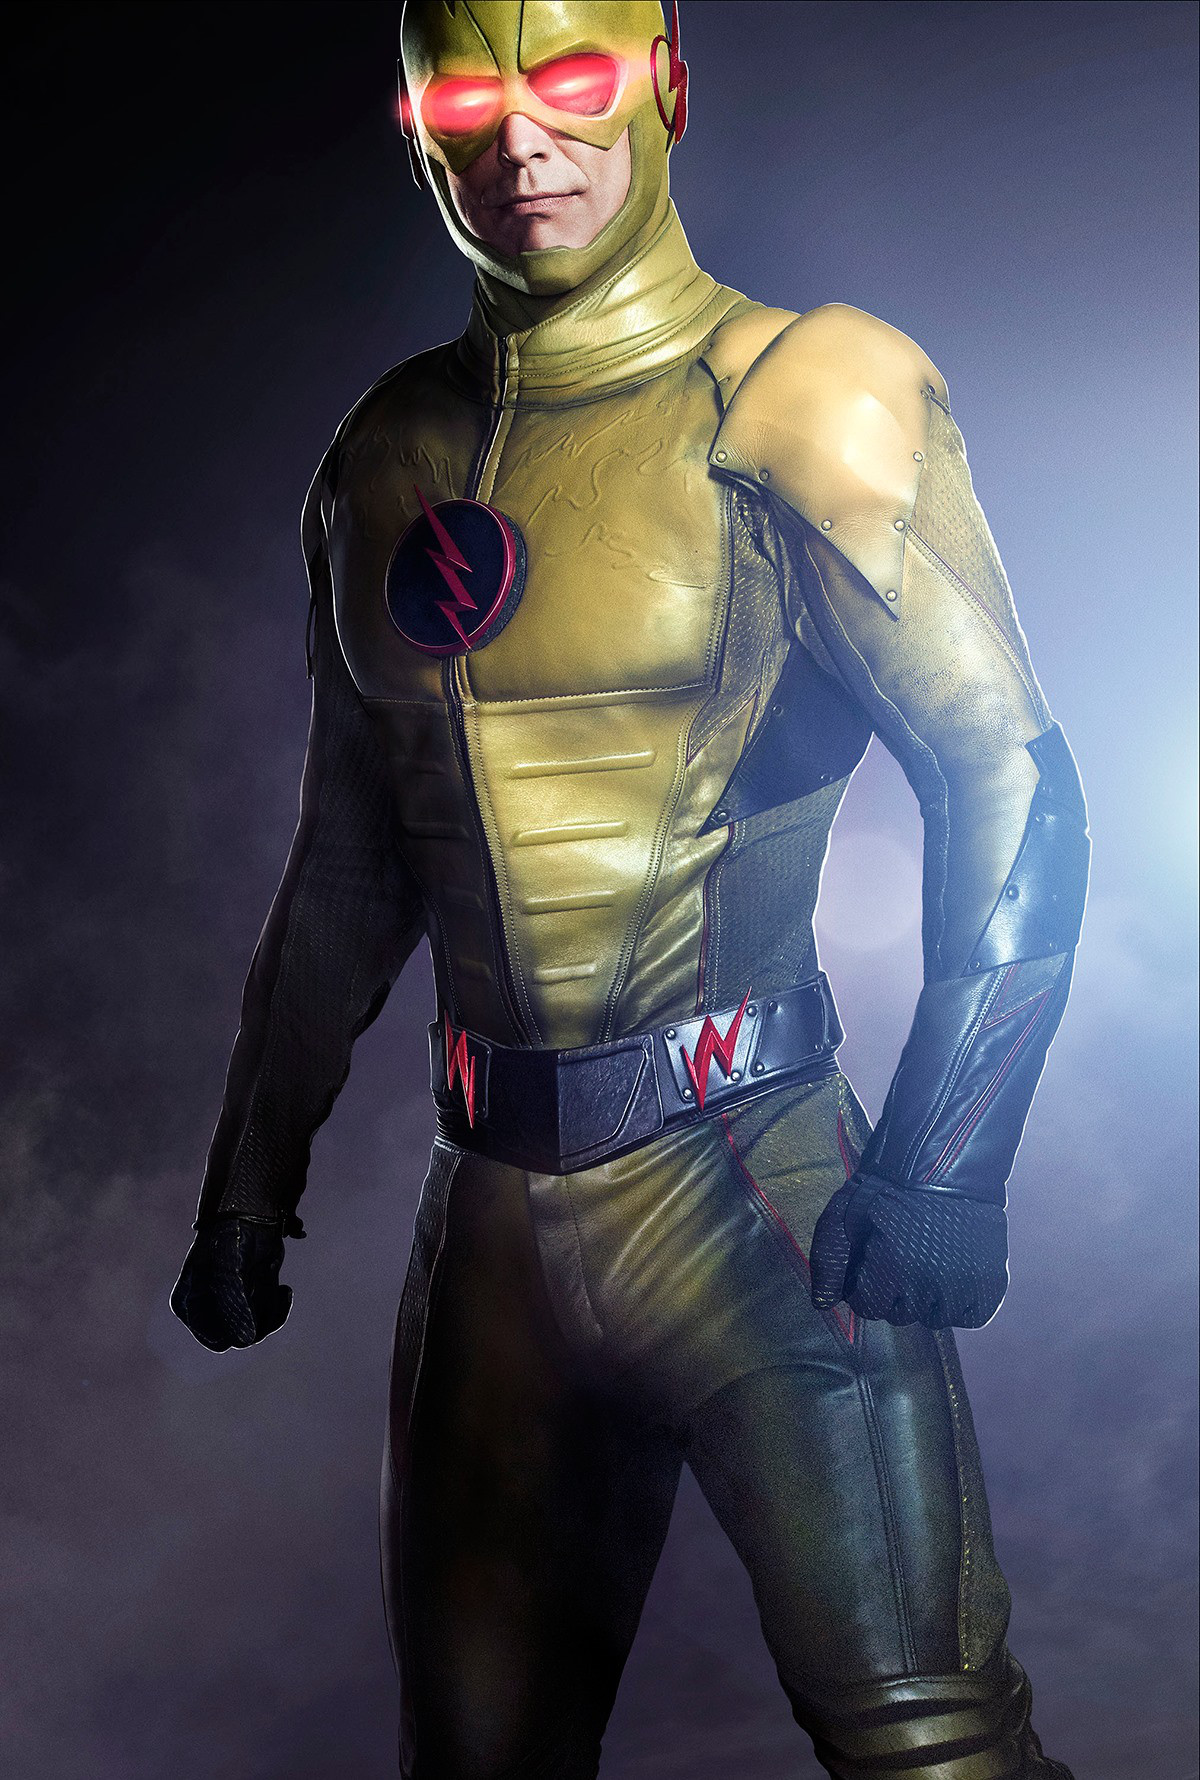 Tom Cavanagh as Reverse Flash in 'The Flash'